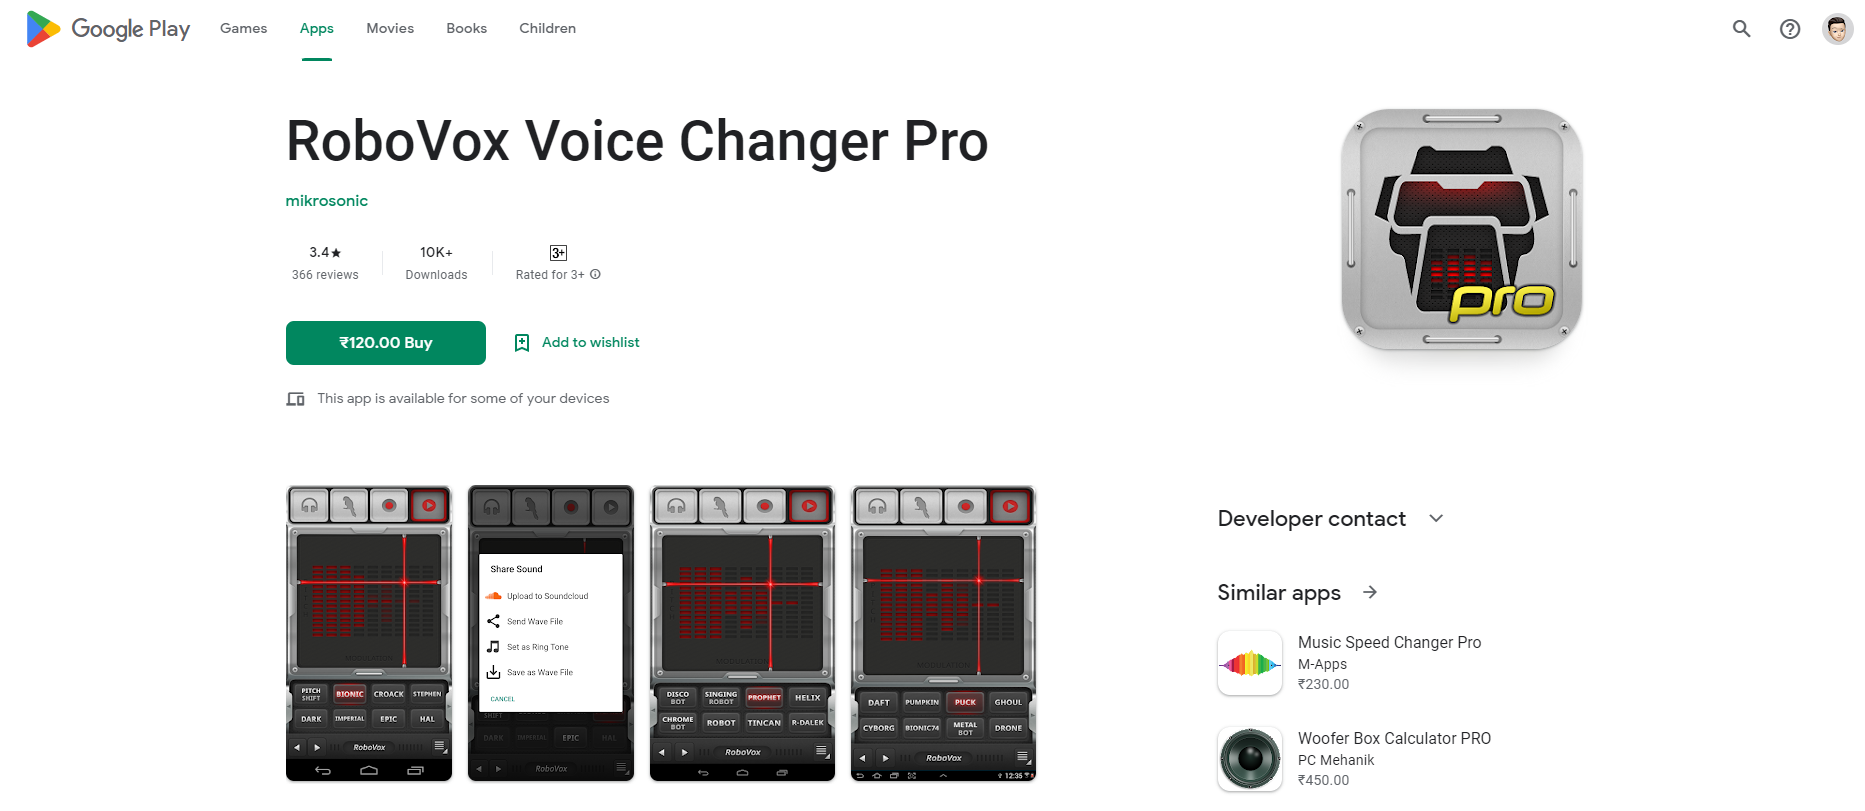 RoboVoX Voice Changer Pro